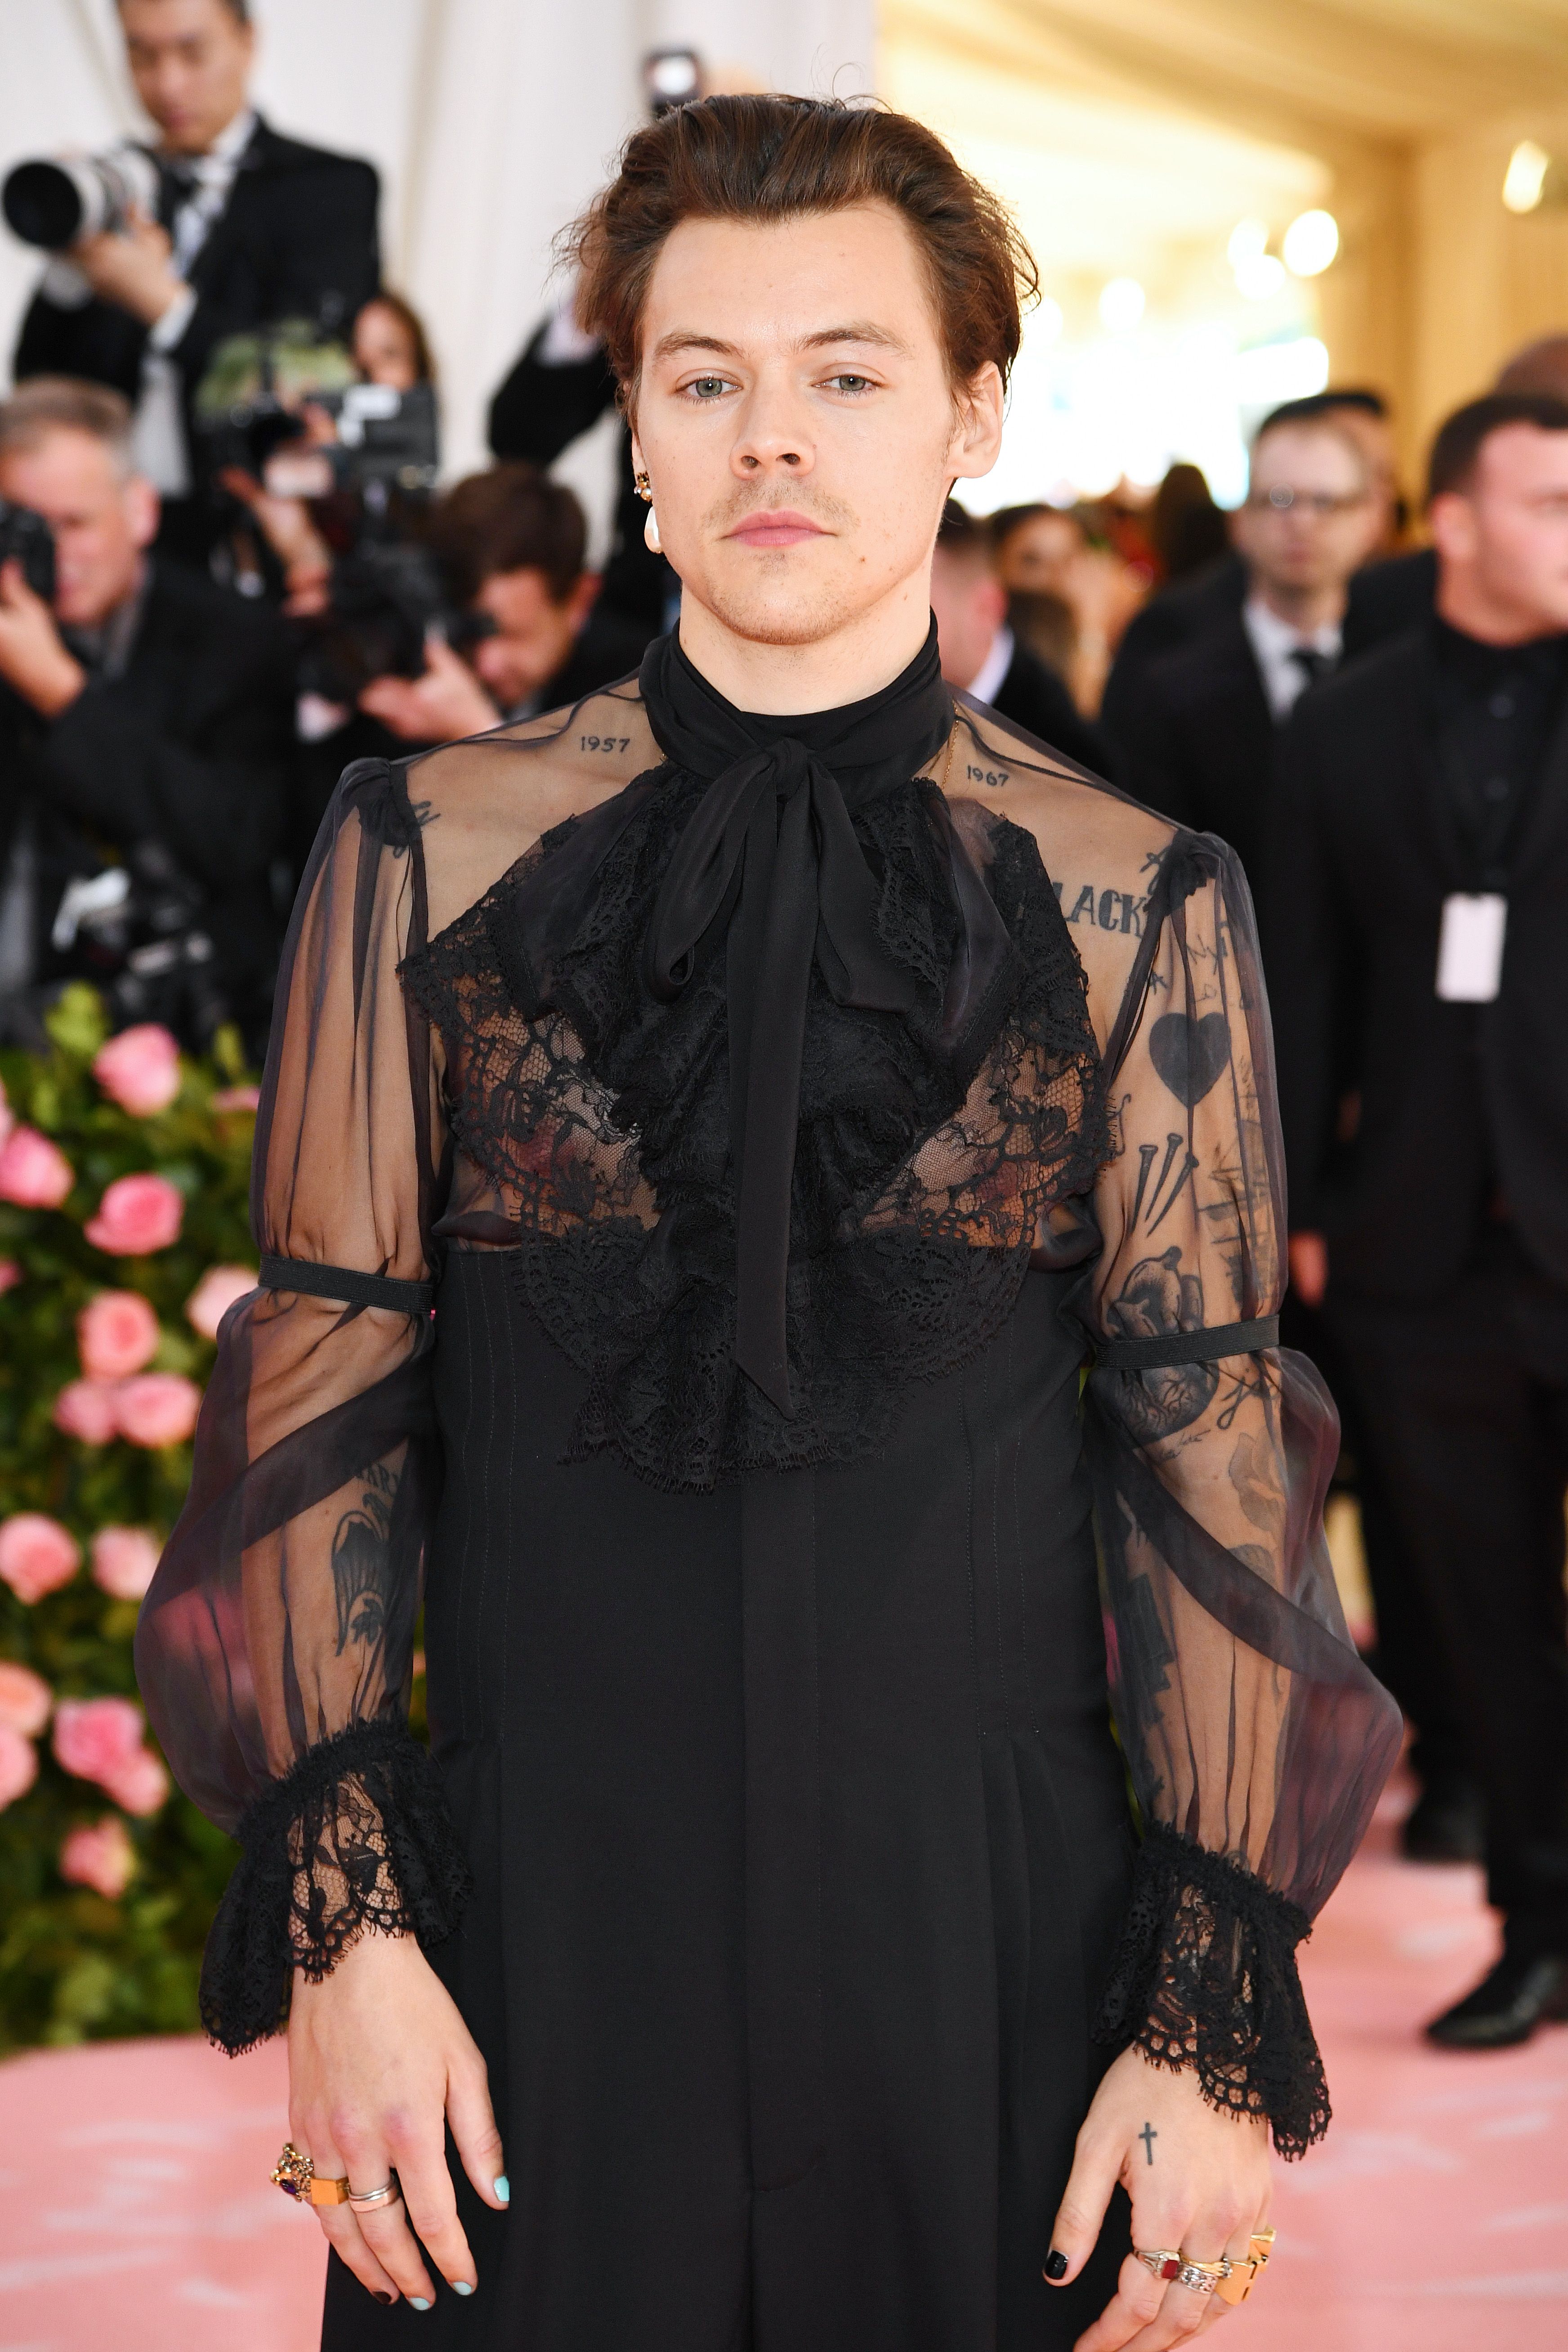 Harry Styles Flaunts His Nipples on the Met Gala Red Carpet – Harry Styles  Met Gala 2019 Outfit